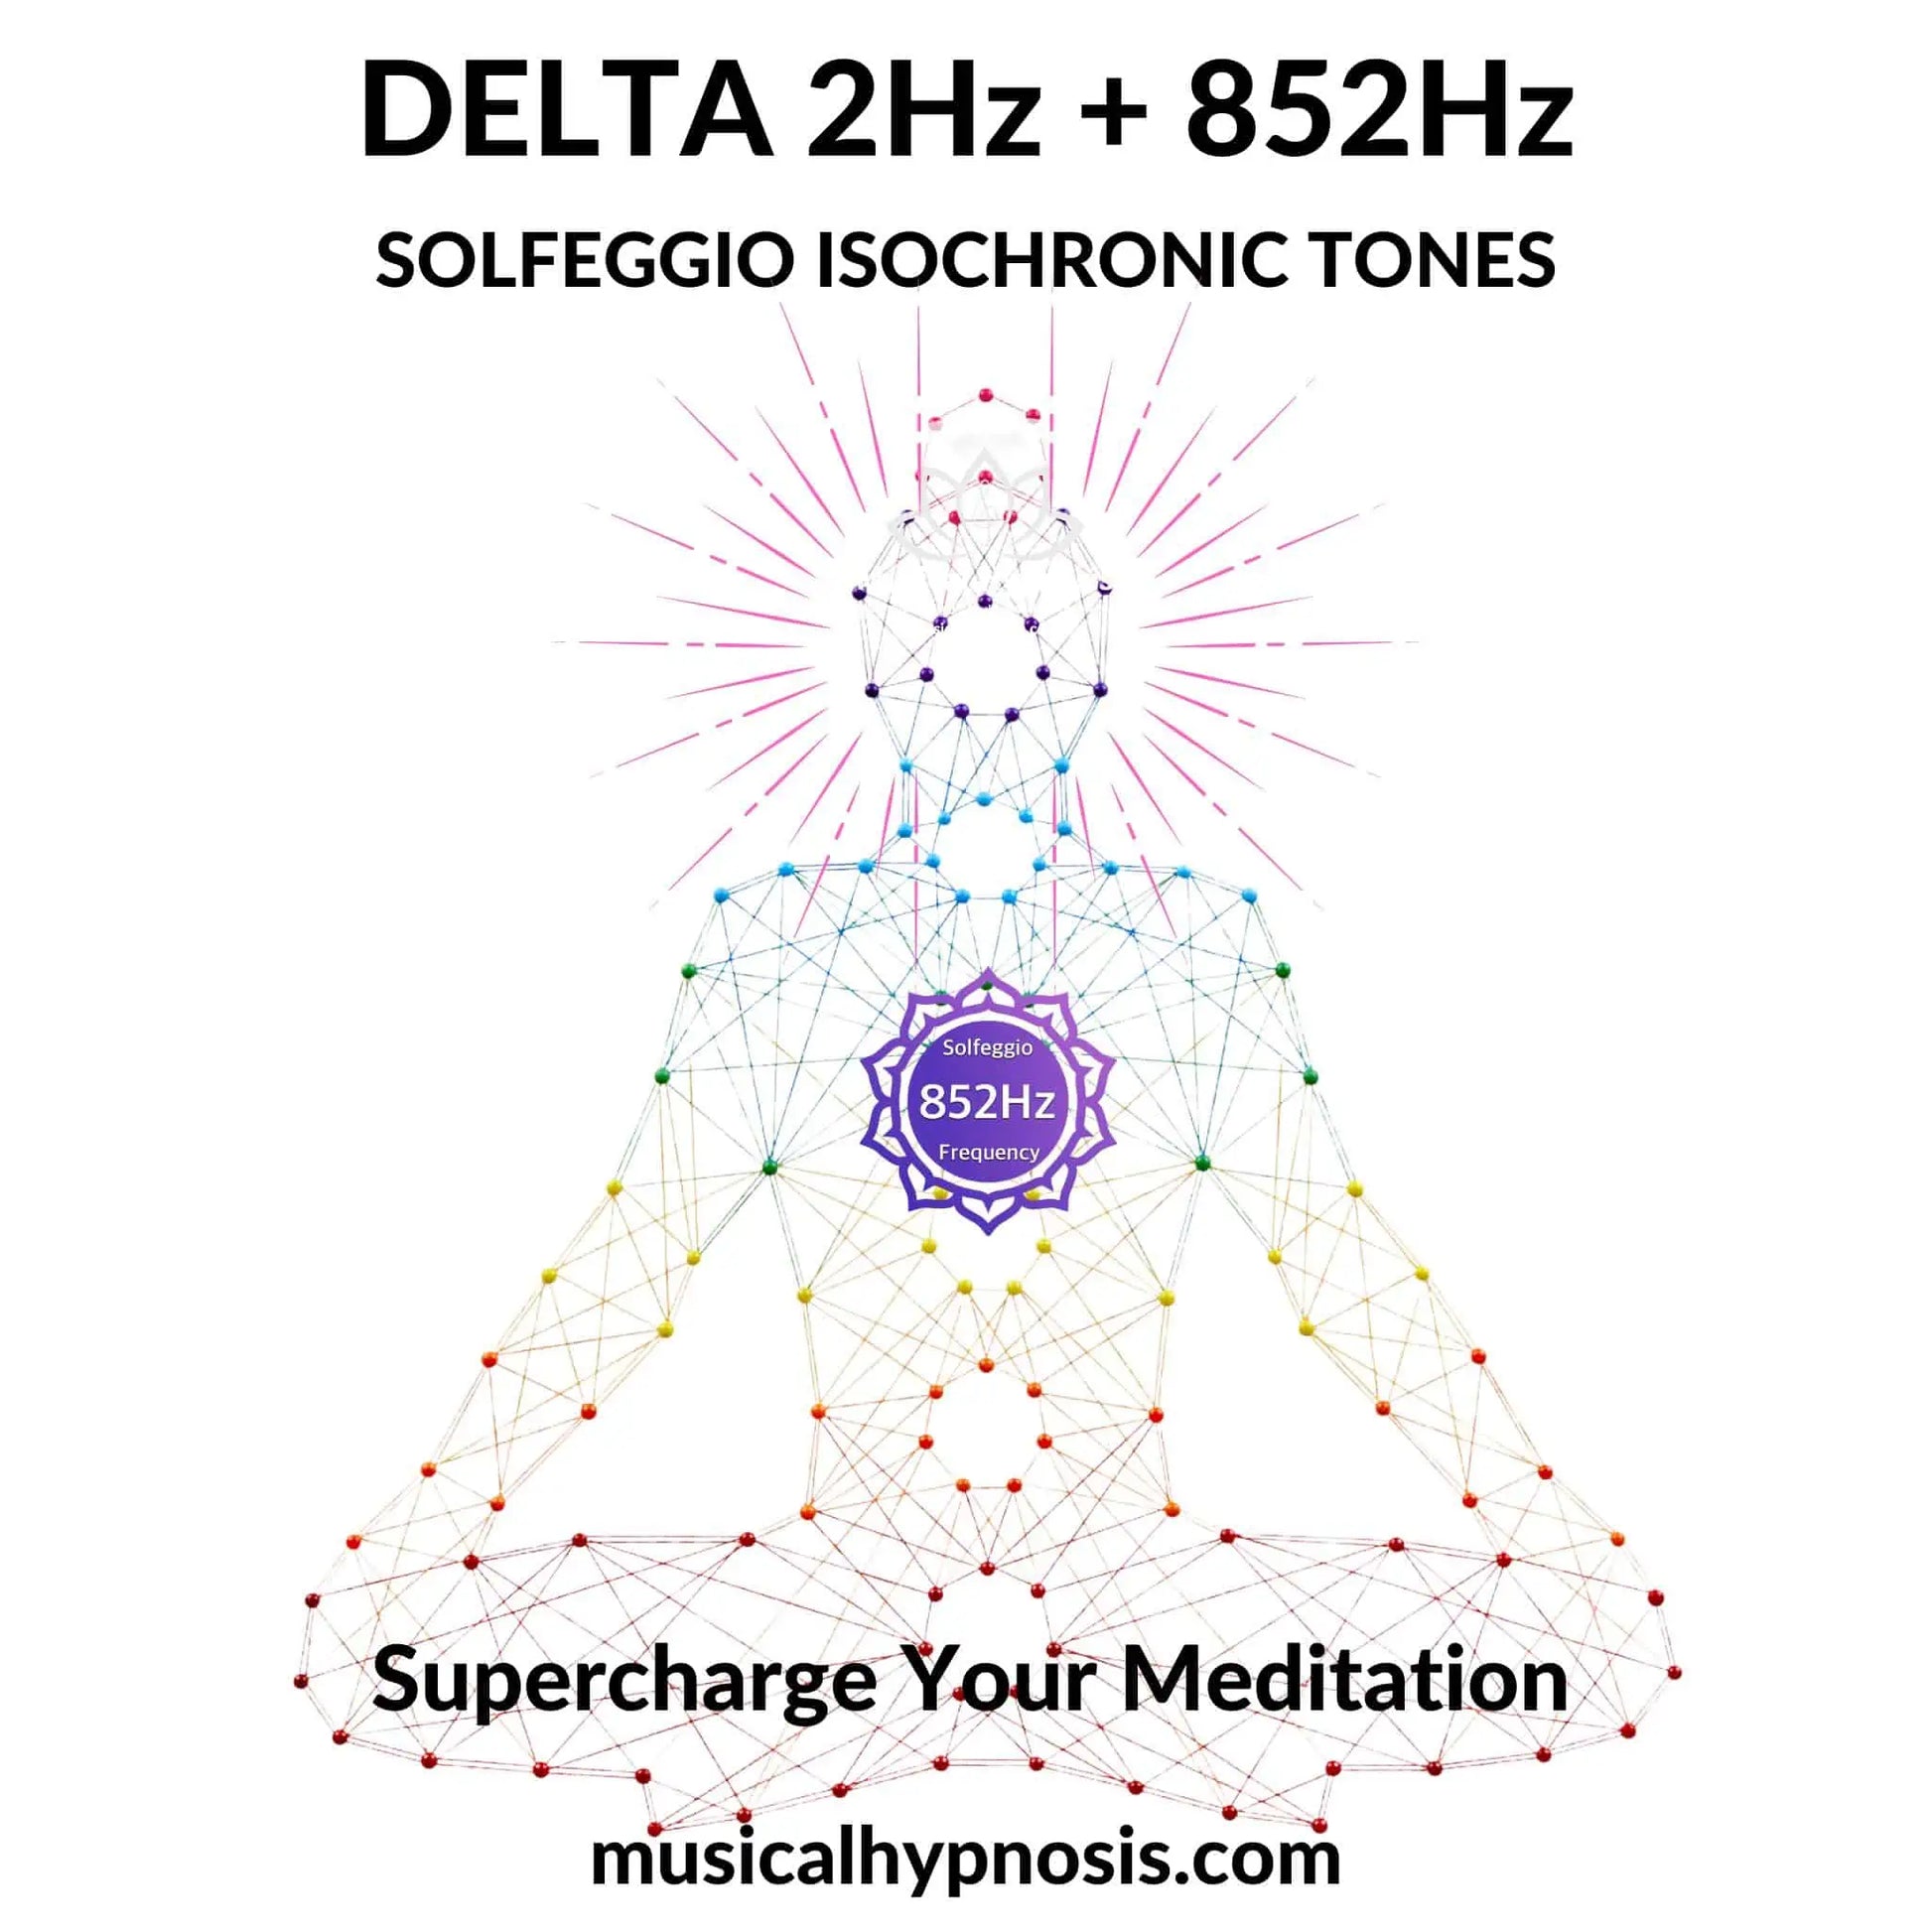 Delta 2Hz and 852Hz Solfeggio Isochronic Tones | 30 minutes